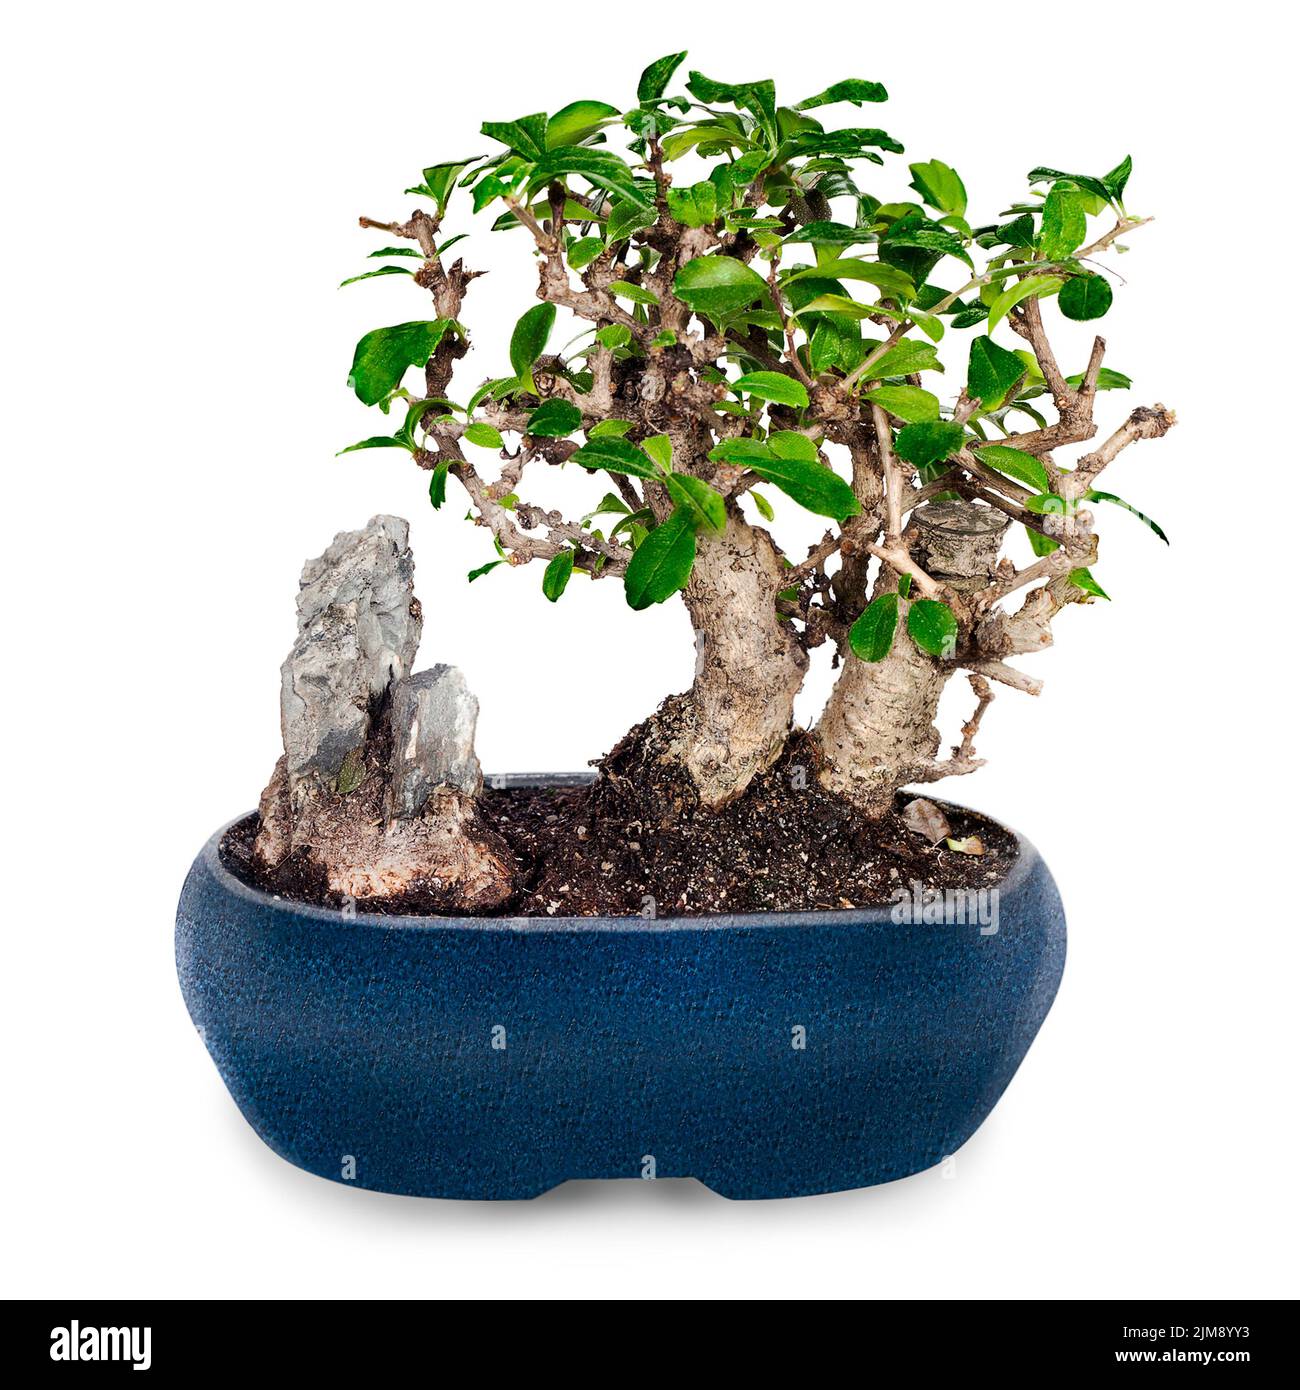 Miniature bonsai tree and stone in blue pot isolat Stock Photo